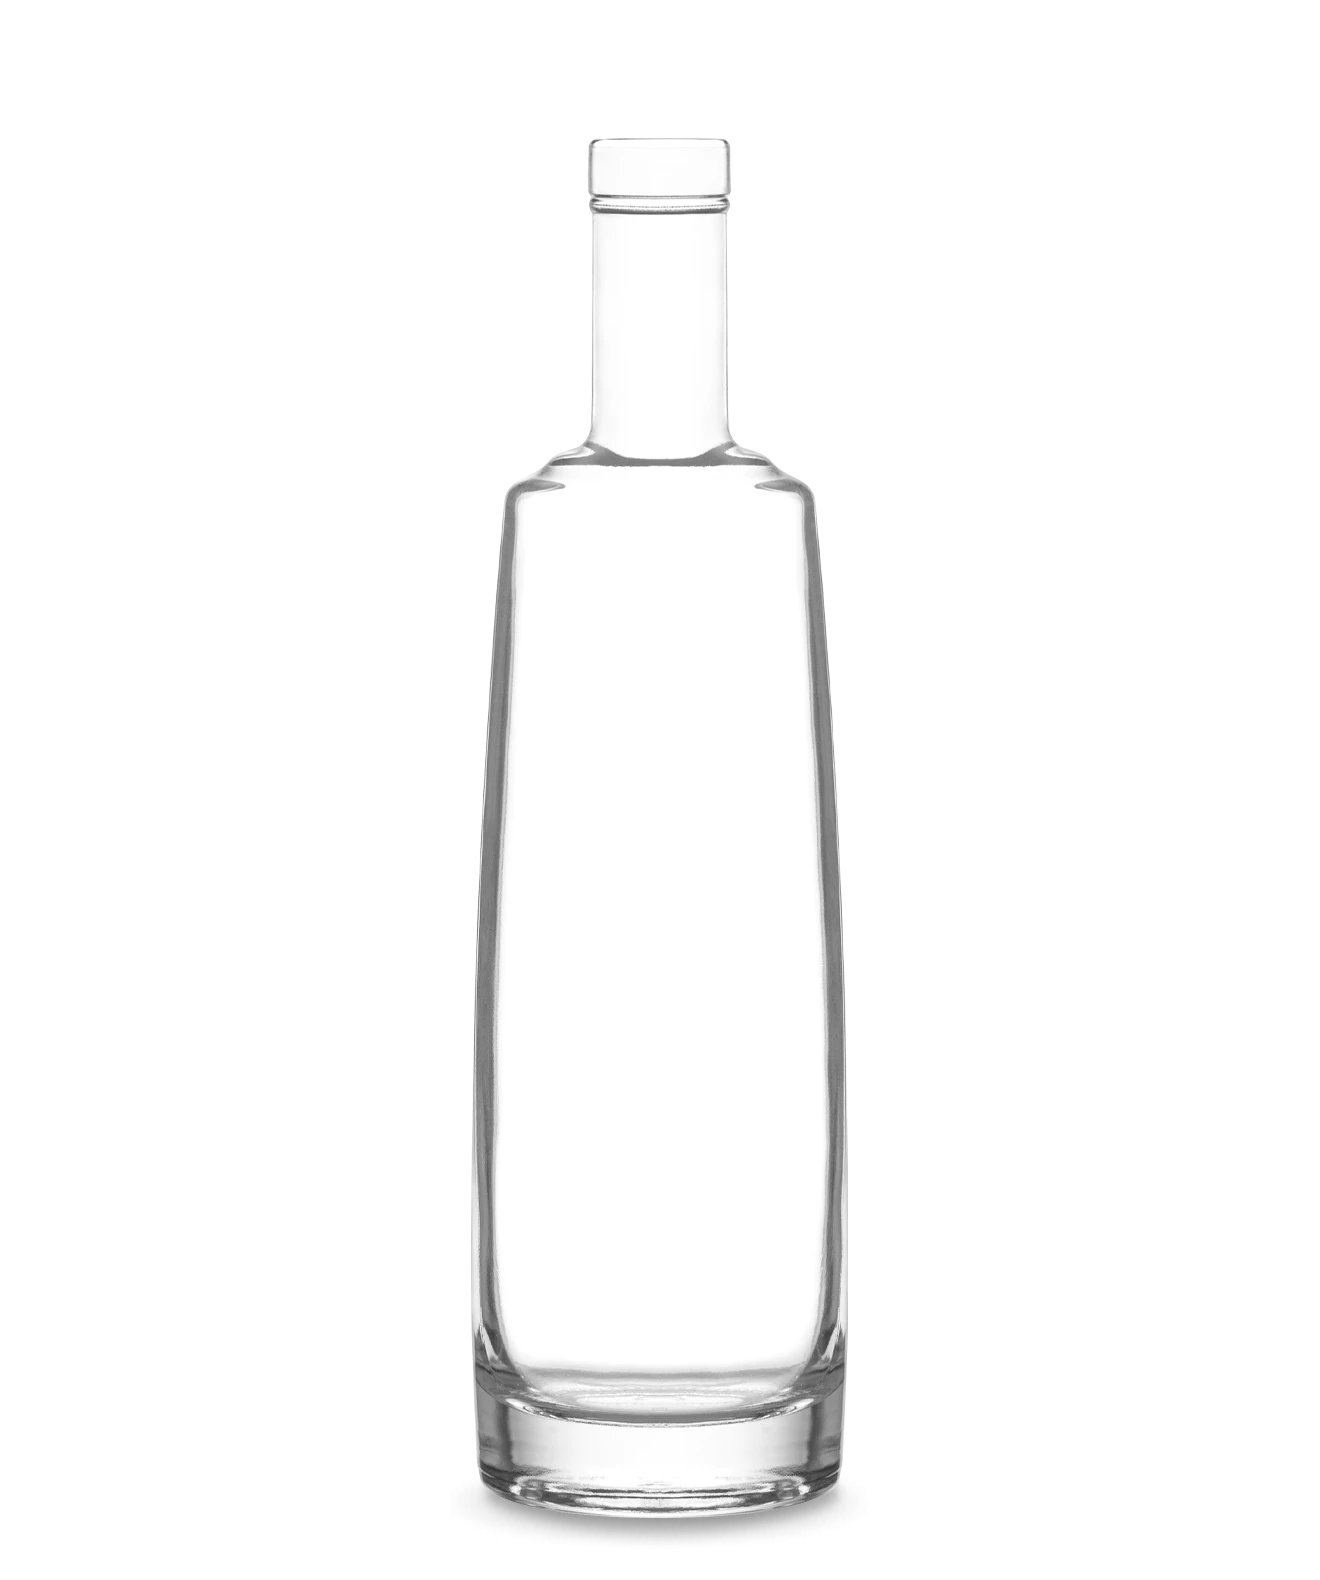 FREJIA Archive Spirits bottles Vetroelite View 1